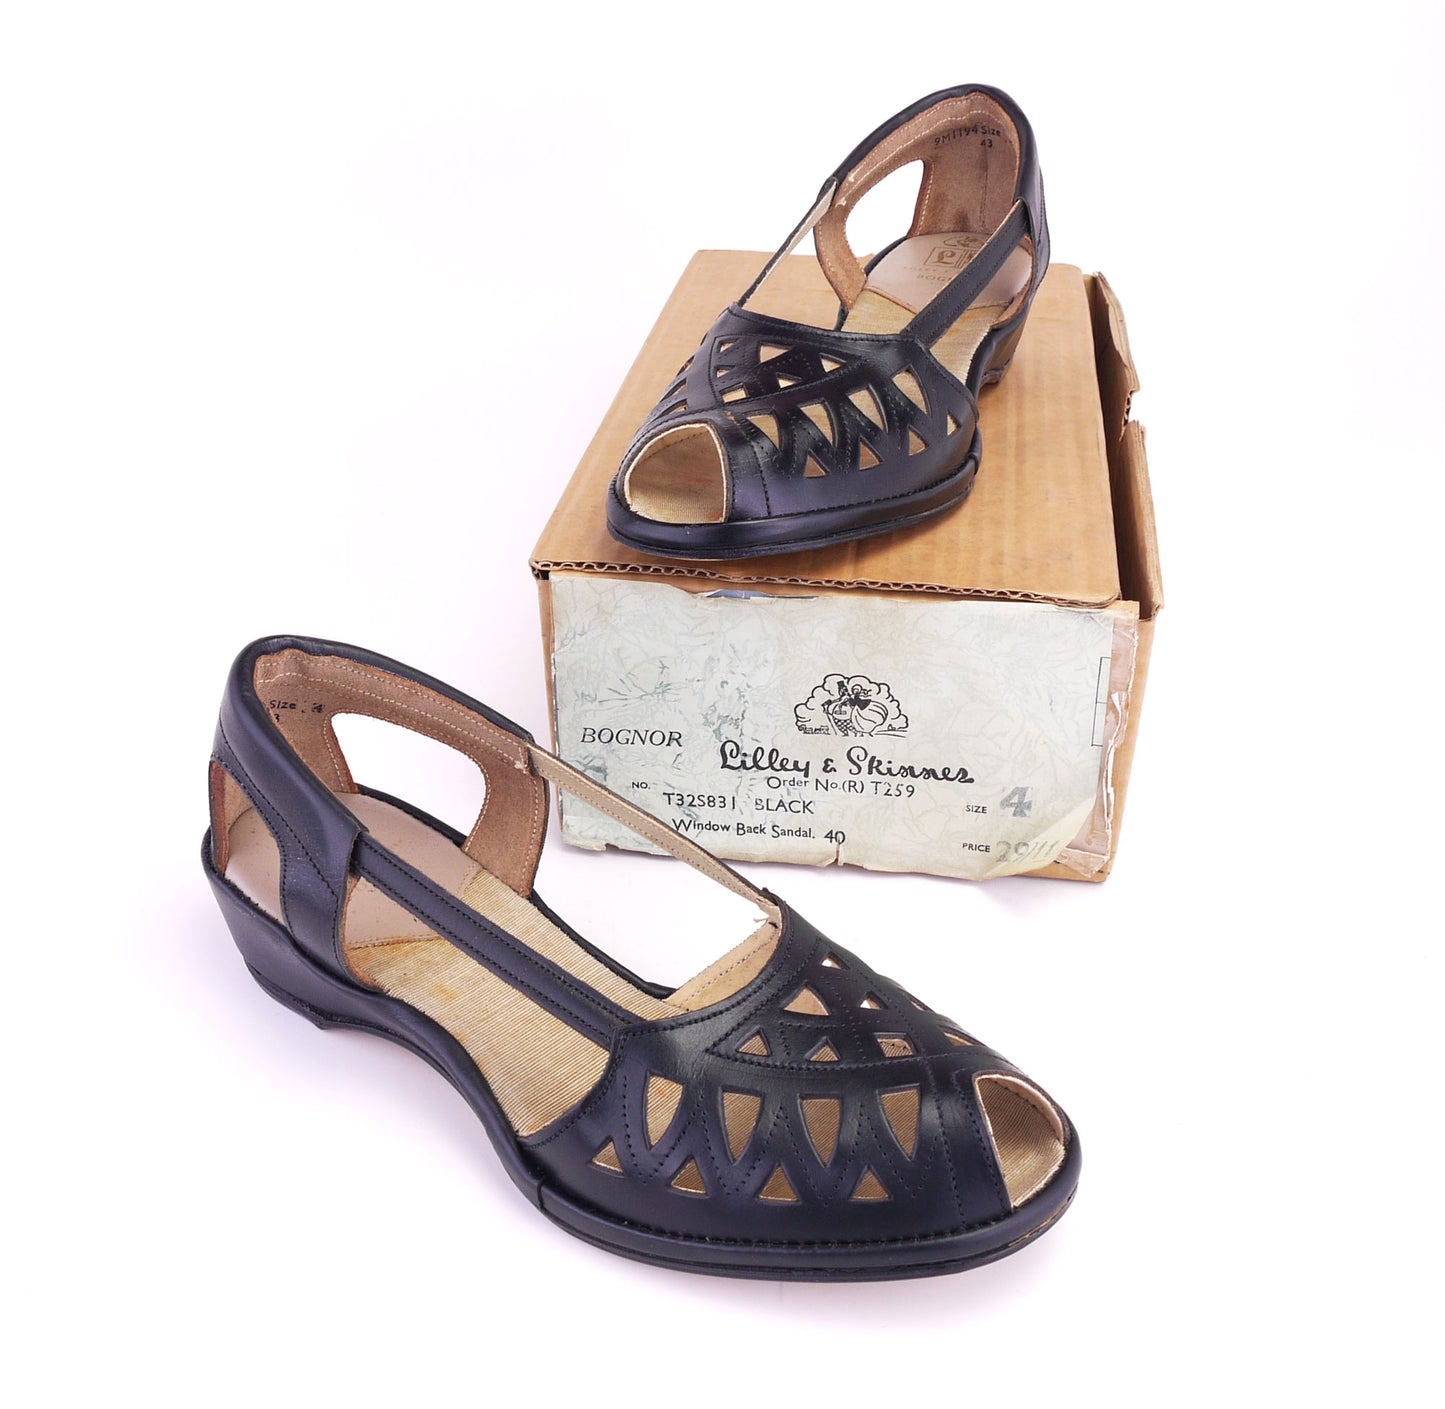 1950s BNIB Black Wedge Sandals by Lilley & Skinner UK 3.5